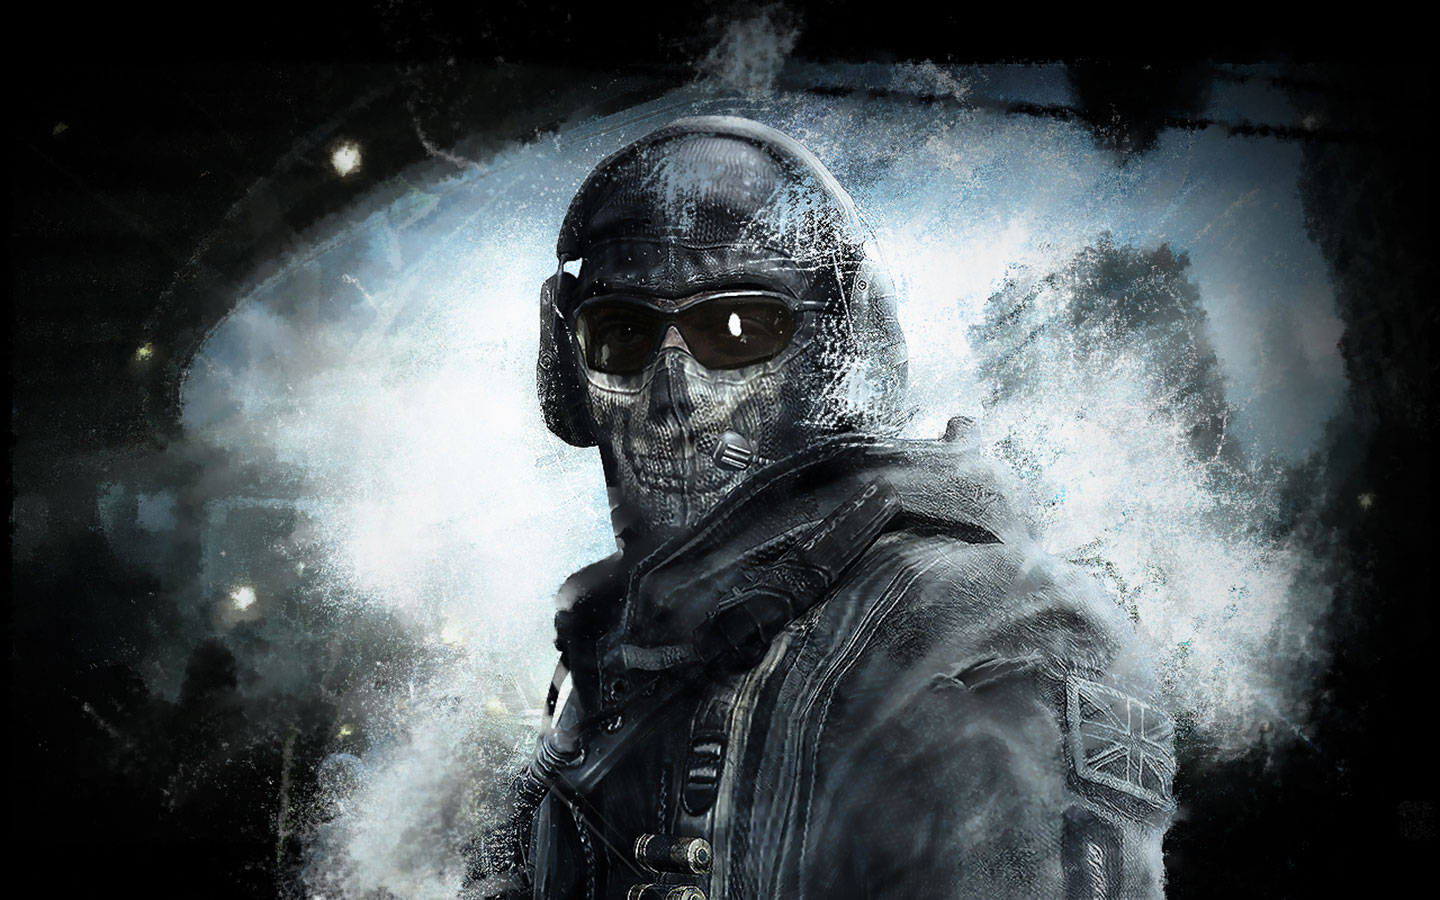 Call Of Duty Modern Warfare Ghost Wallpaper